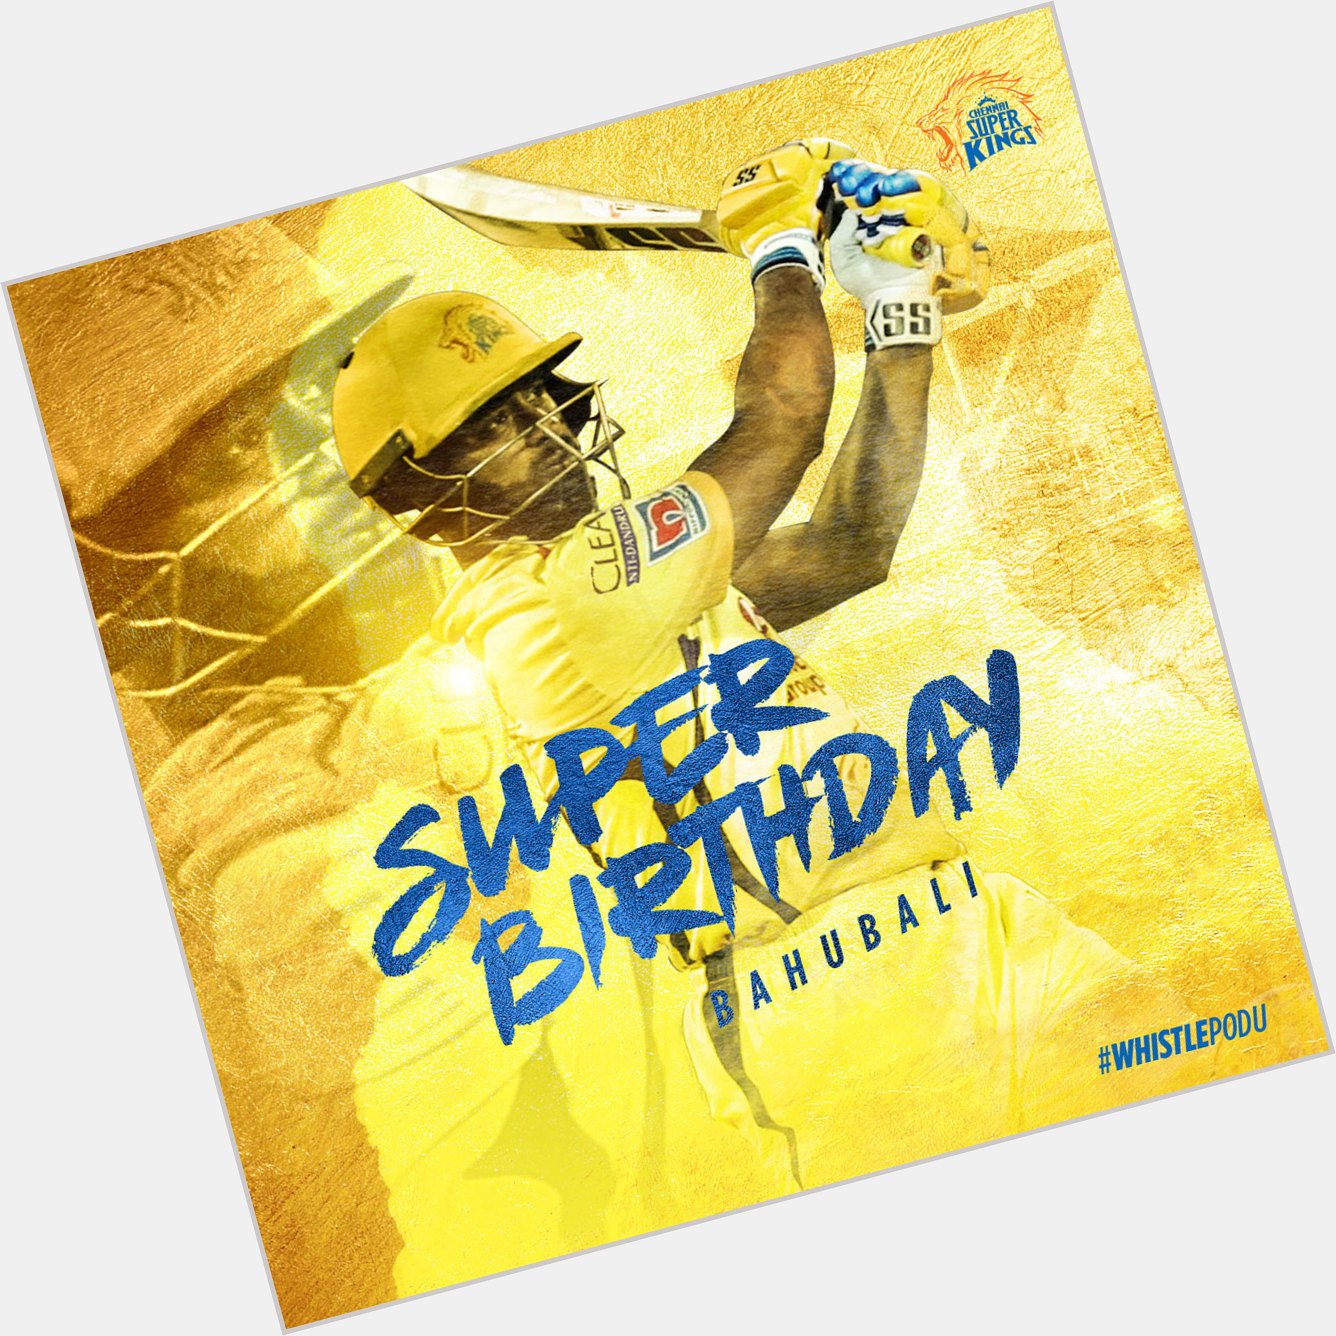 Happy birthday Ambati Rayudu
Hope you play Indian Cricket  